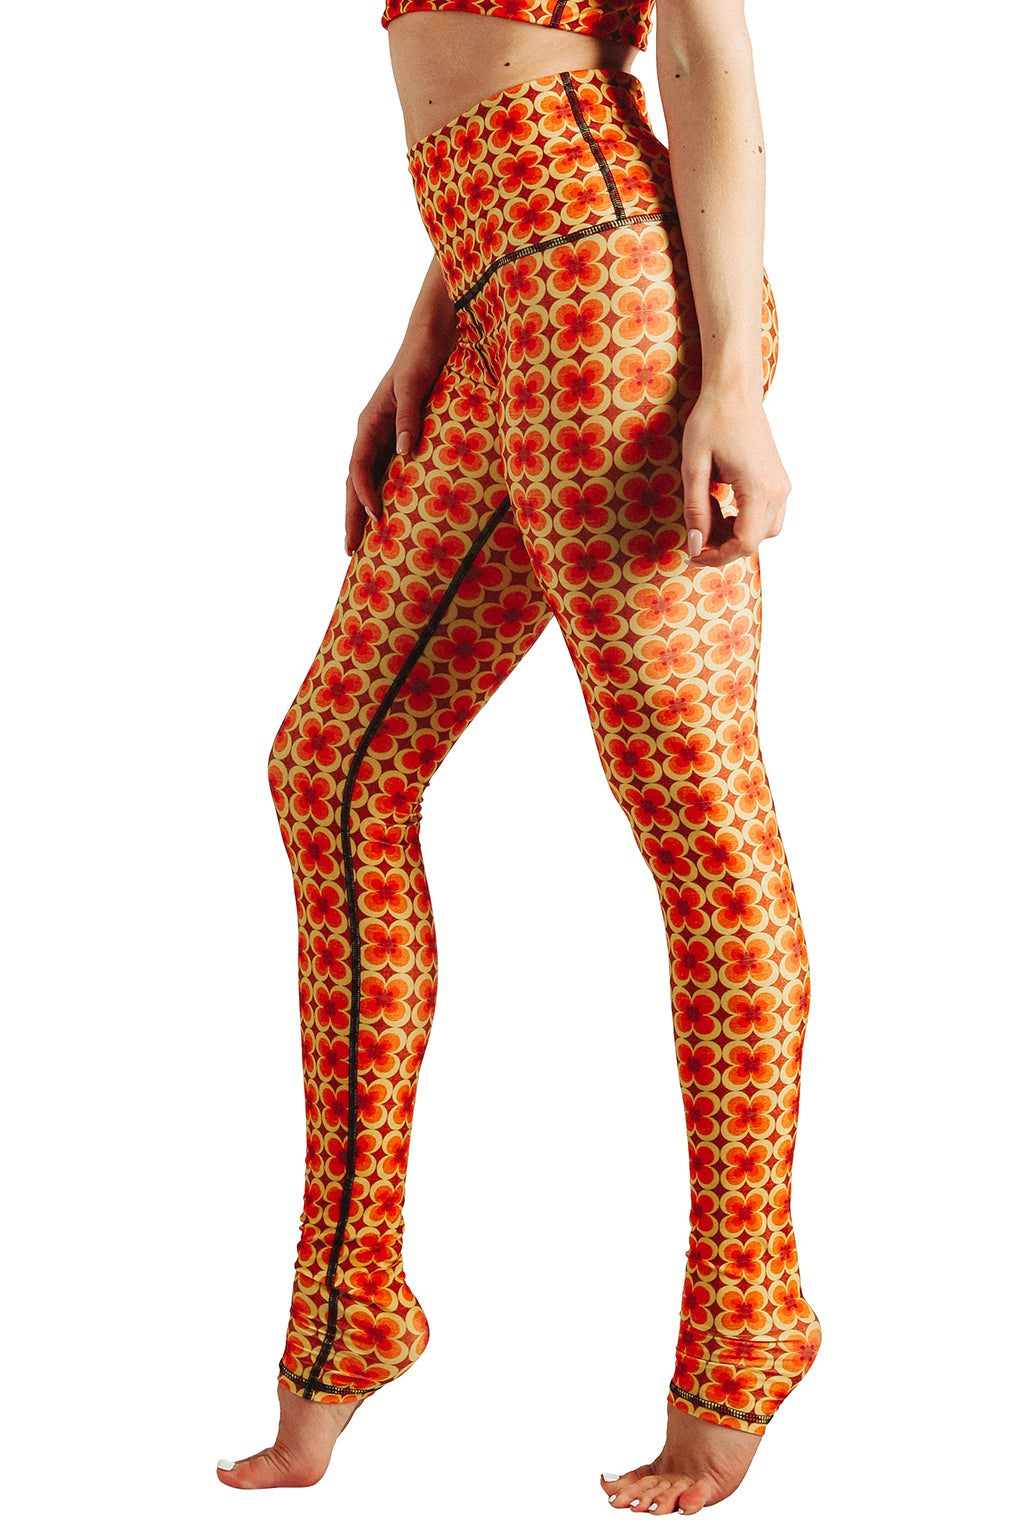 Funky Yoga Leggings Women, Orange Trippy 70s High Waisted Pants Cute P –  Starcove Fashion